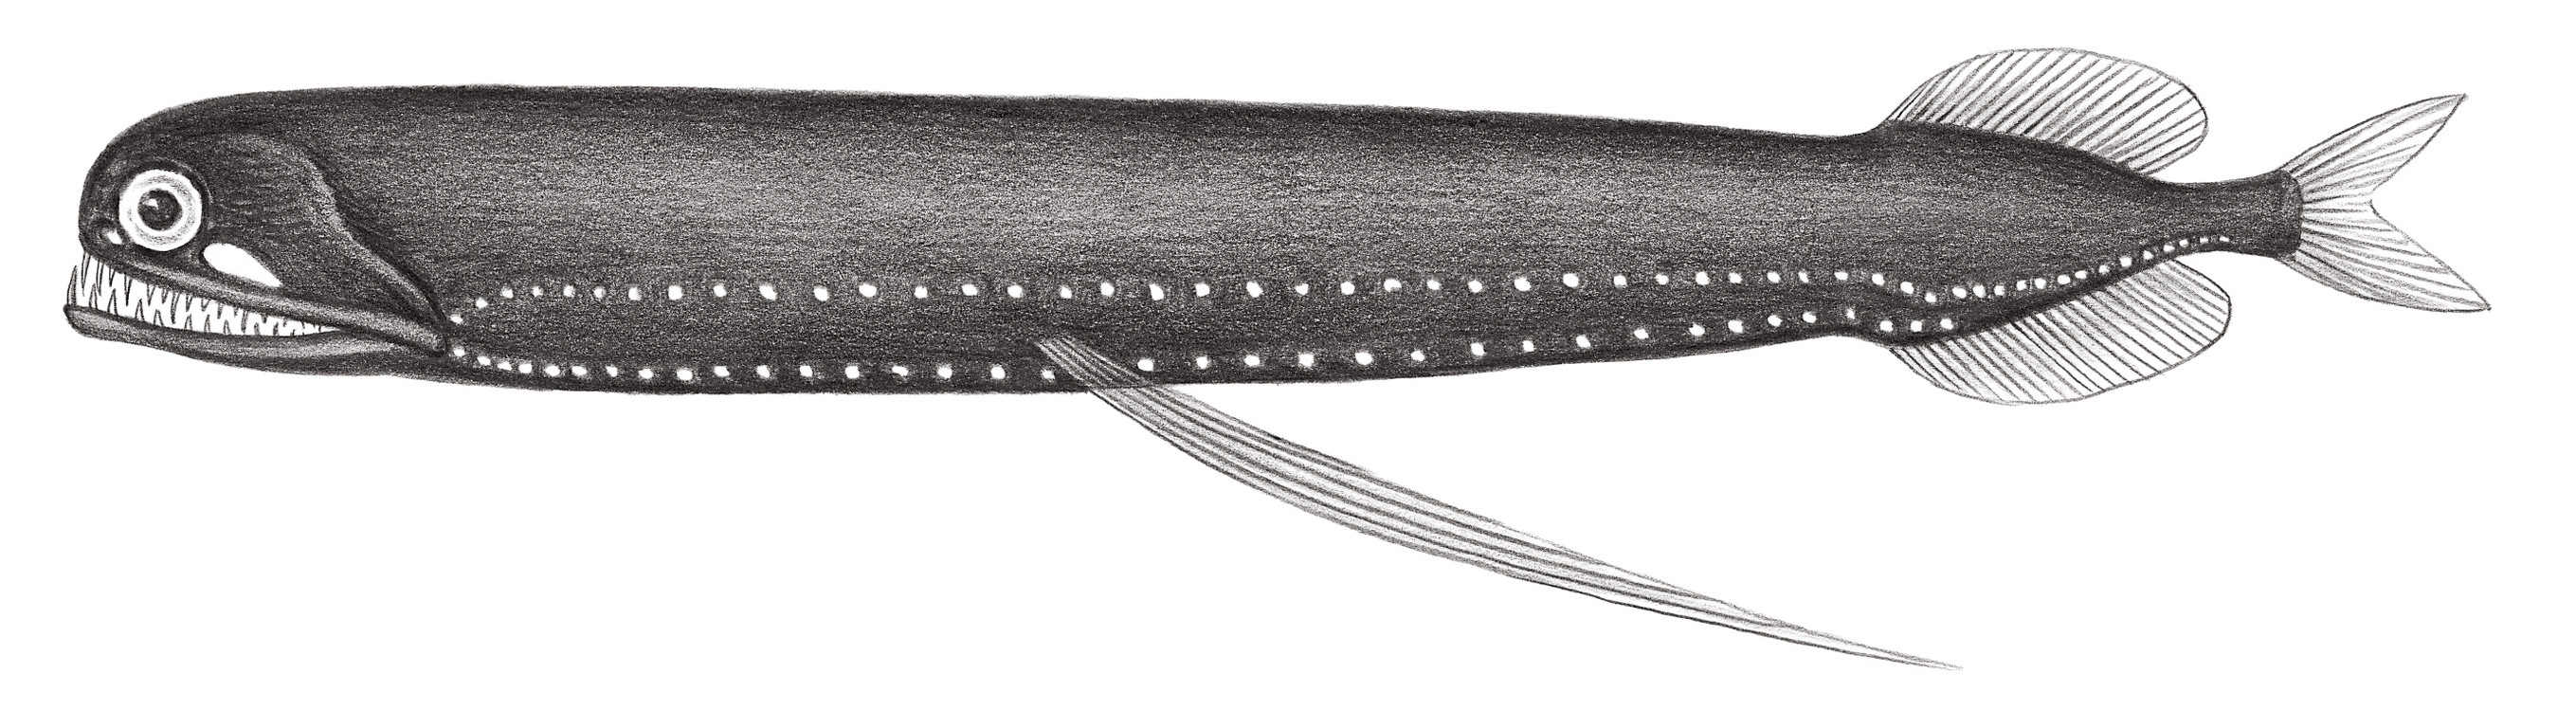 441.	格氏光巨口魚 Photostomias guernei Collett, 1889